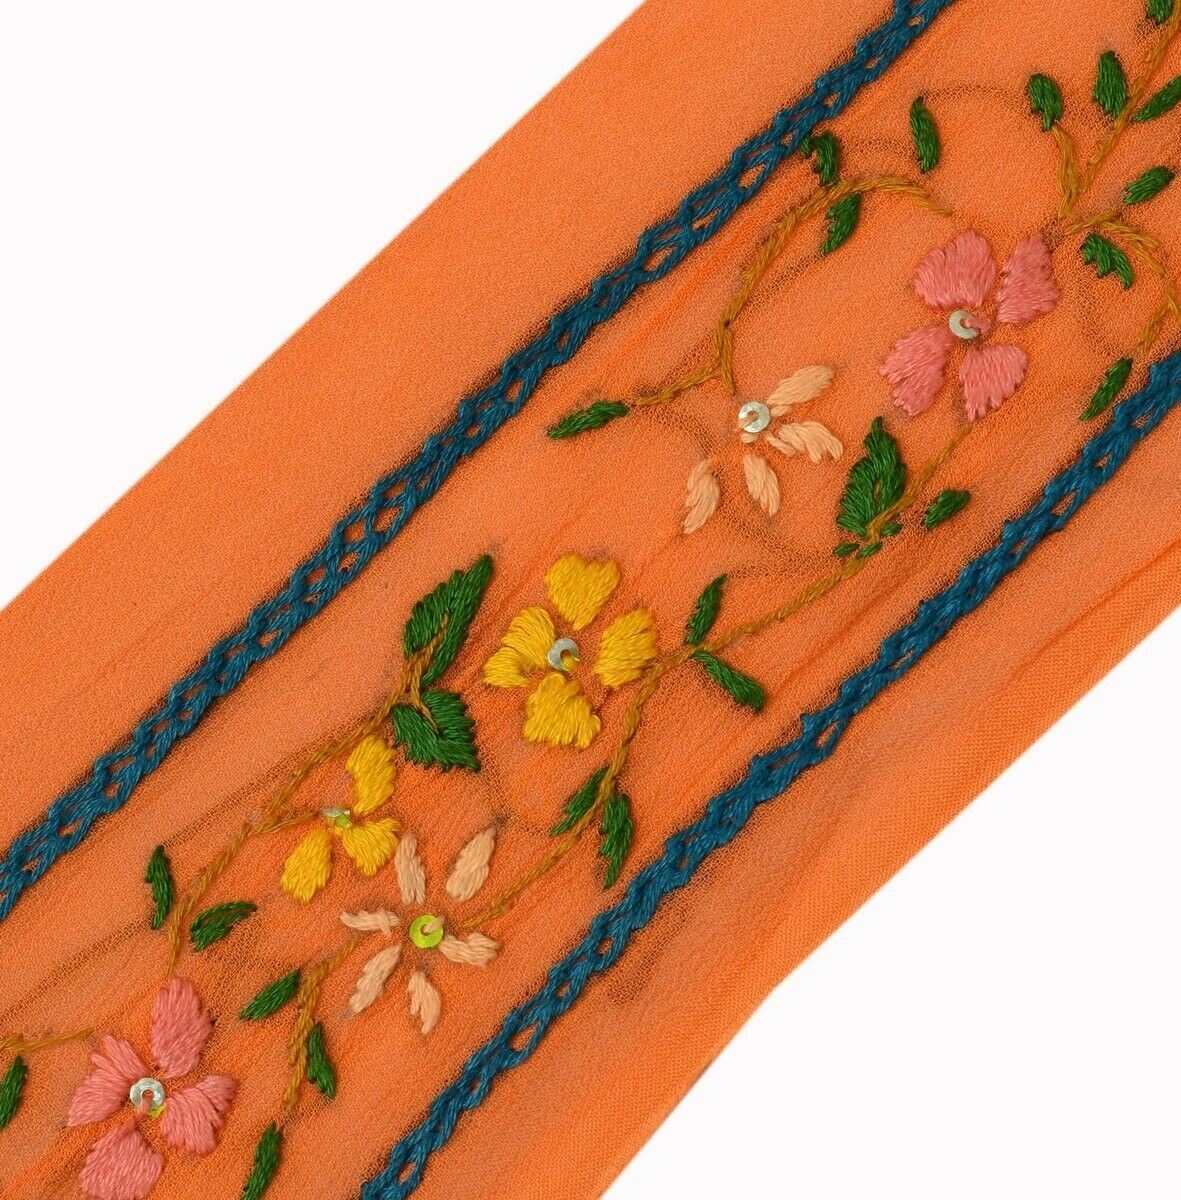 Embroidered Orange Lace